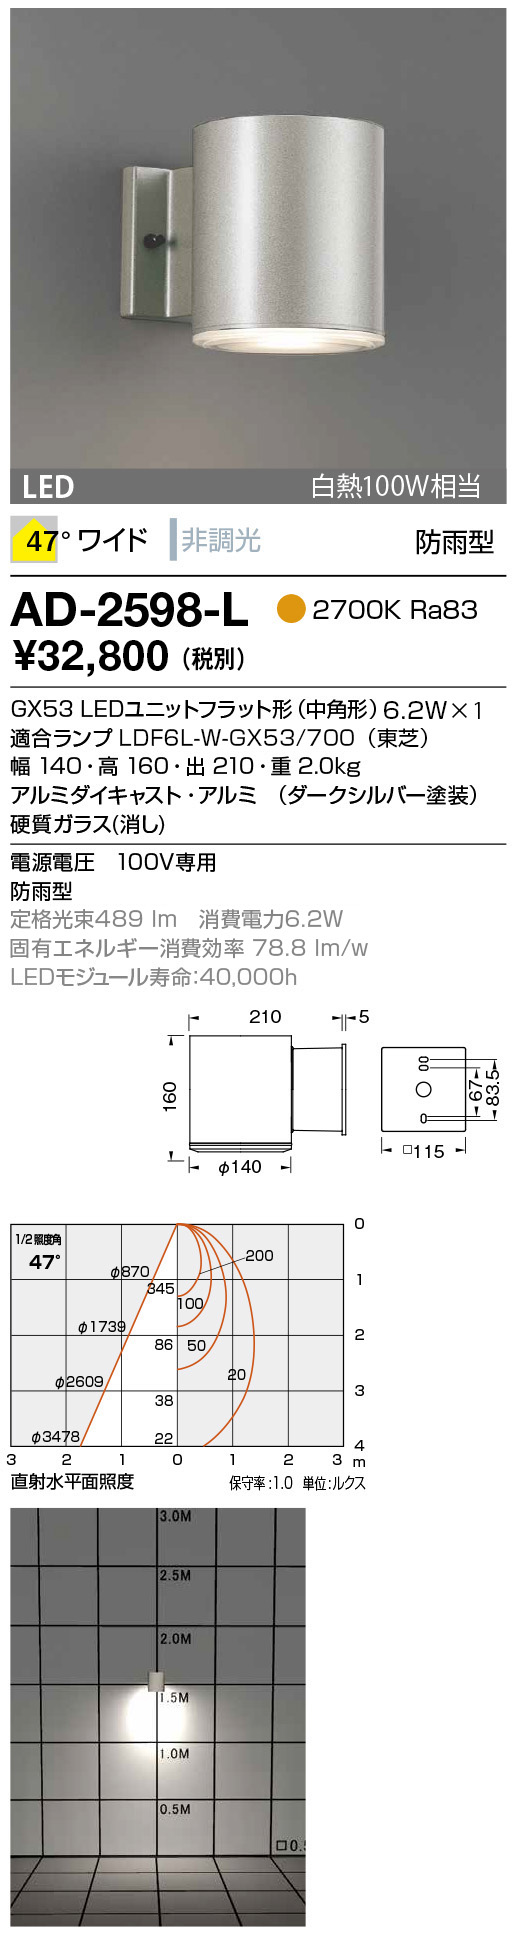 AD-3135-L 山田照明 屋外用スポットライト 黒色 LED 電球色 調光 27度 - 5